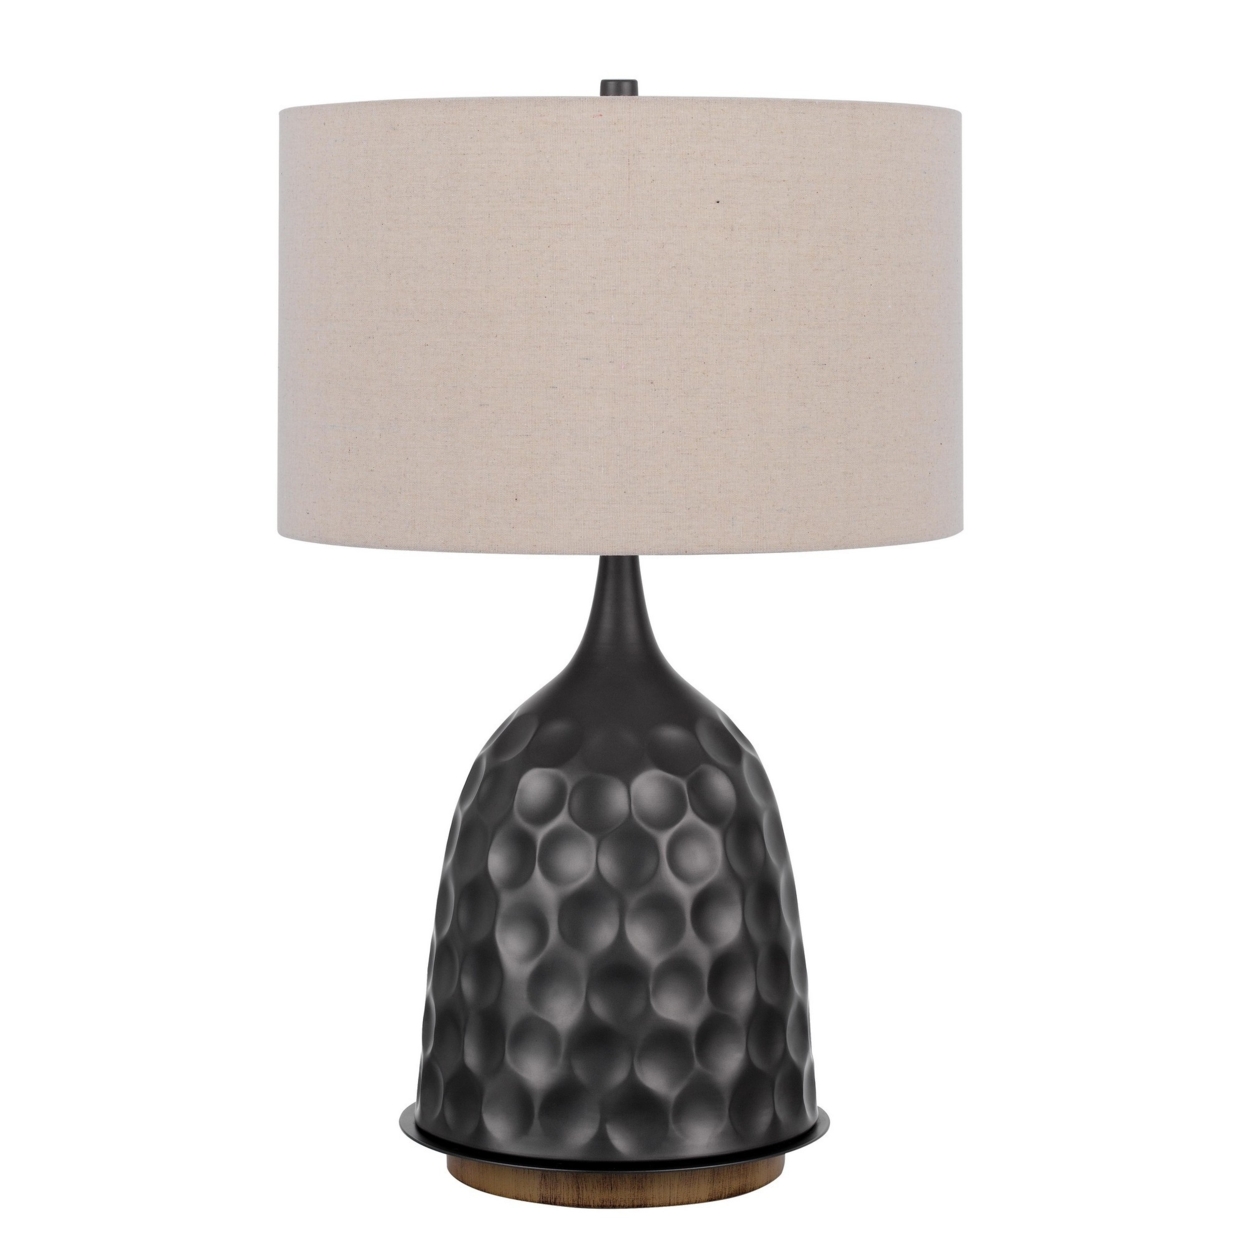 29 Inch Modern Table Lamp, Drum Shade, Diverted Wood Base, Dark Bronze Brown- Saltoro Sherpi